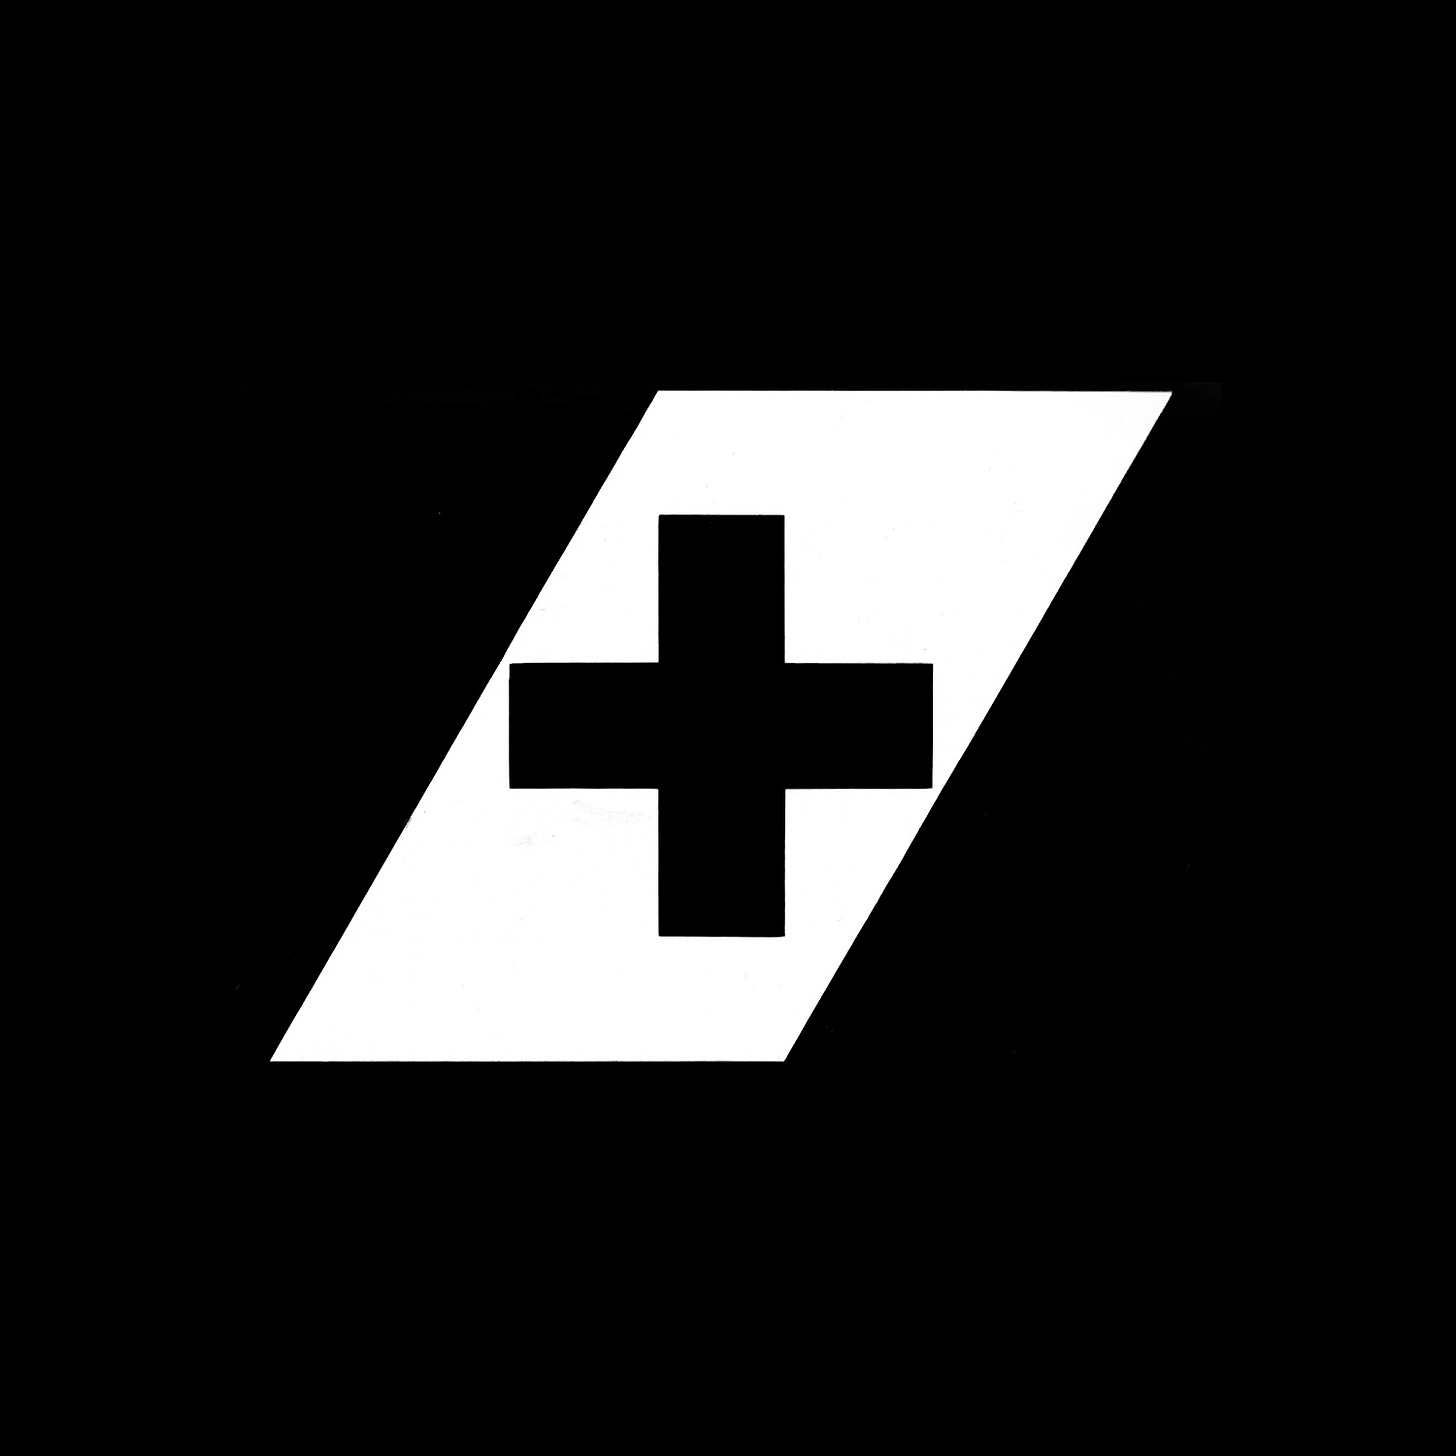 Swissair logo by Karl Gerstner, a Swiss cross set inside a rhomboid, with the feeling of a plane tail